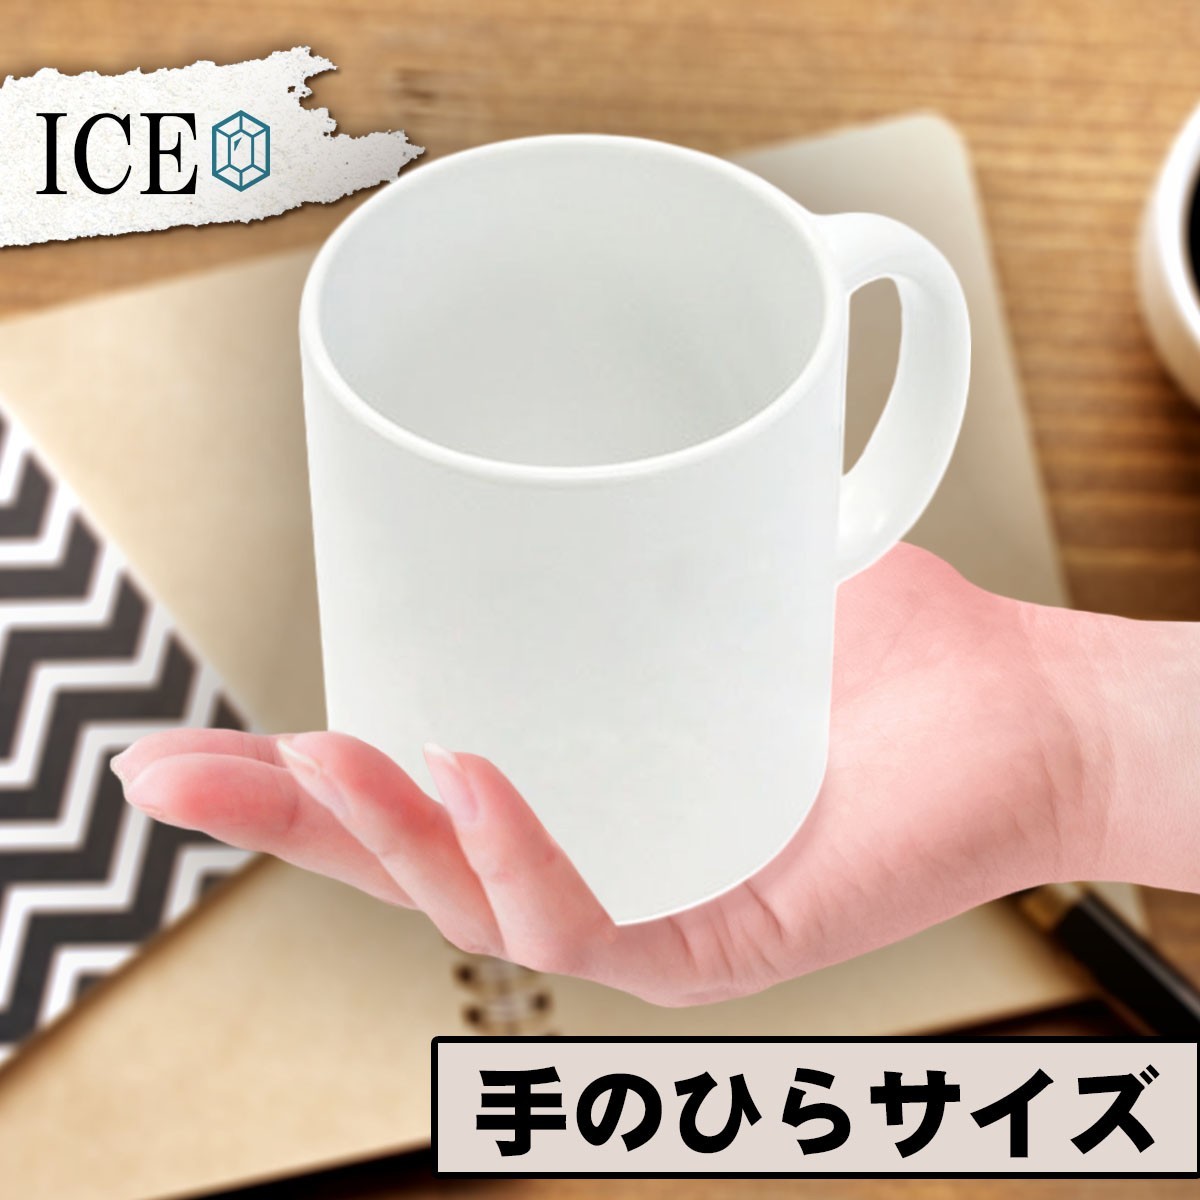 UFO 青 おもしろ マグカップ コップ 陶器 可愛い かわいい 白 シンプル かわいい カッコイイ シュール 面白い ジョーク ゆるい プレゼント_画像2